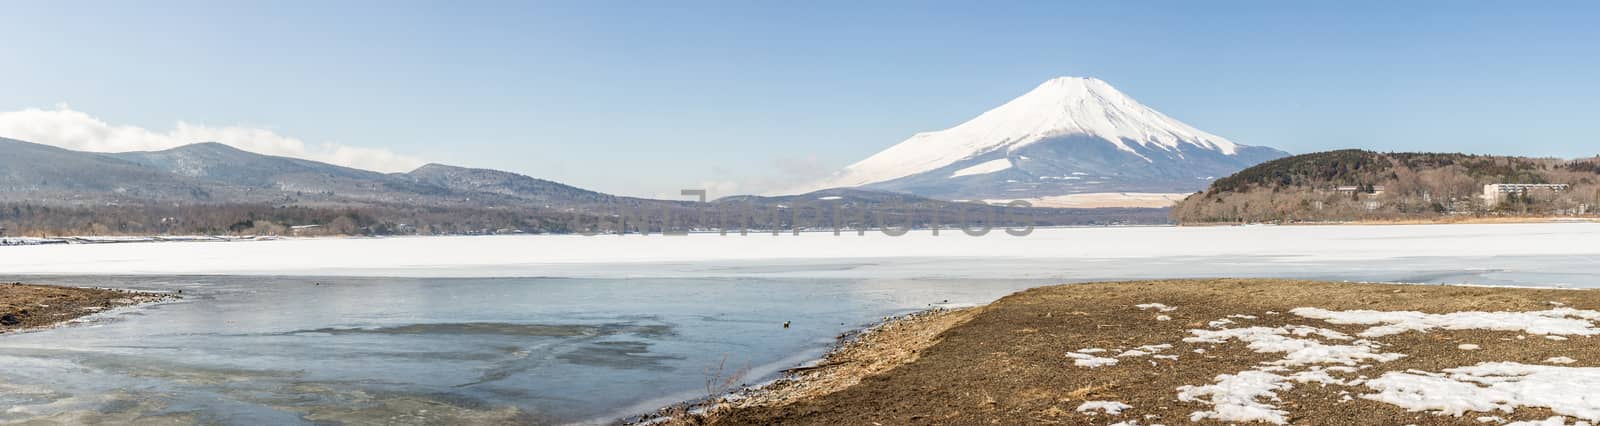 Winter Mount Fuji at Iced Yamanaka Lake in snow winter season Japan Panoramic